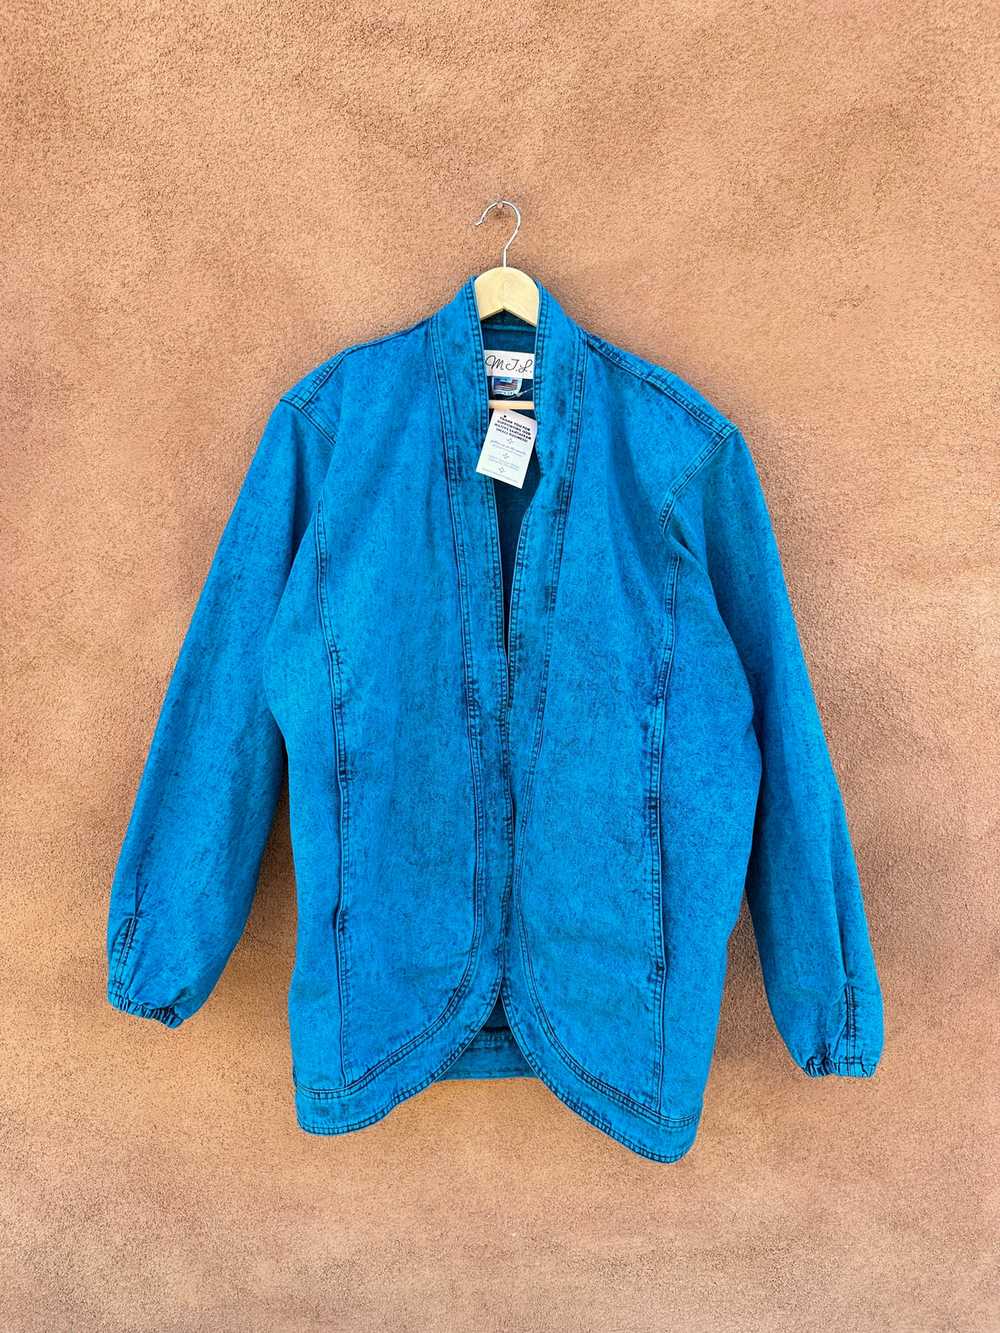 Kokopelli Blue Santa Fe Style Denim Jacket by MJR - image 2